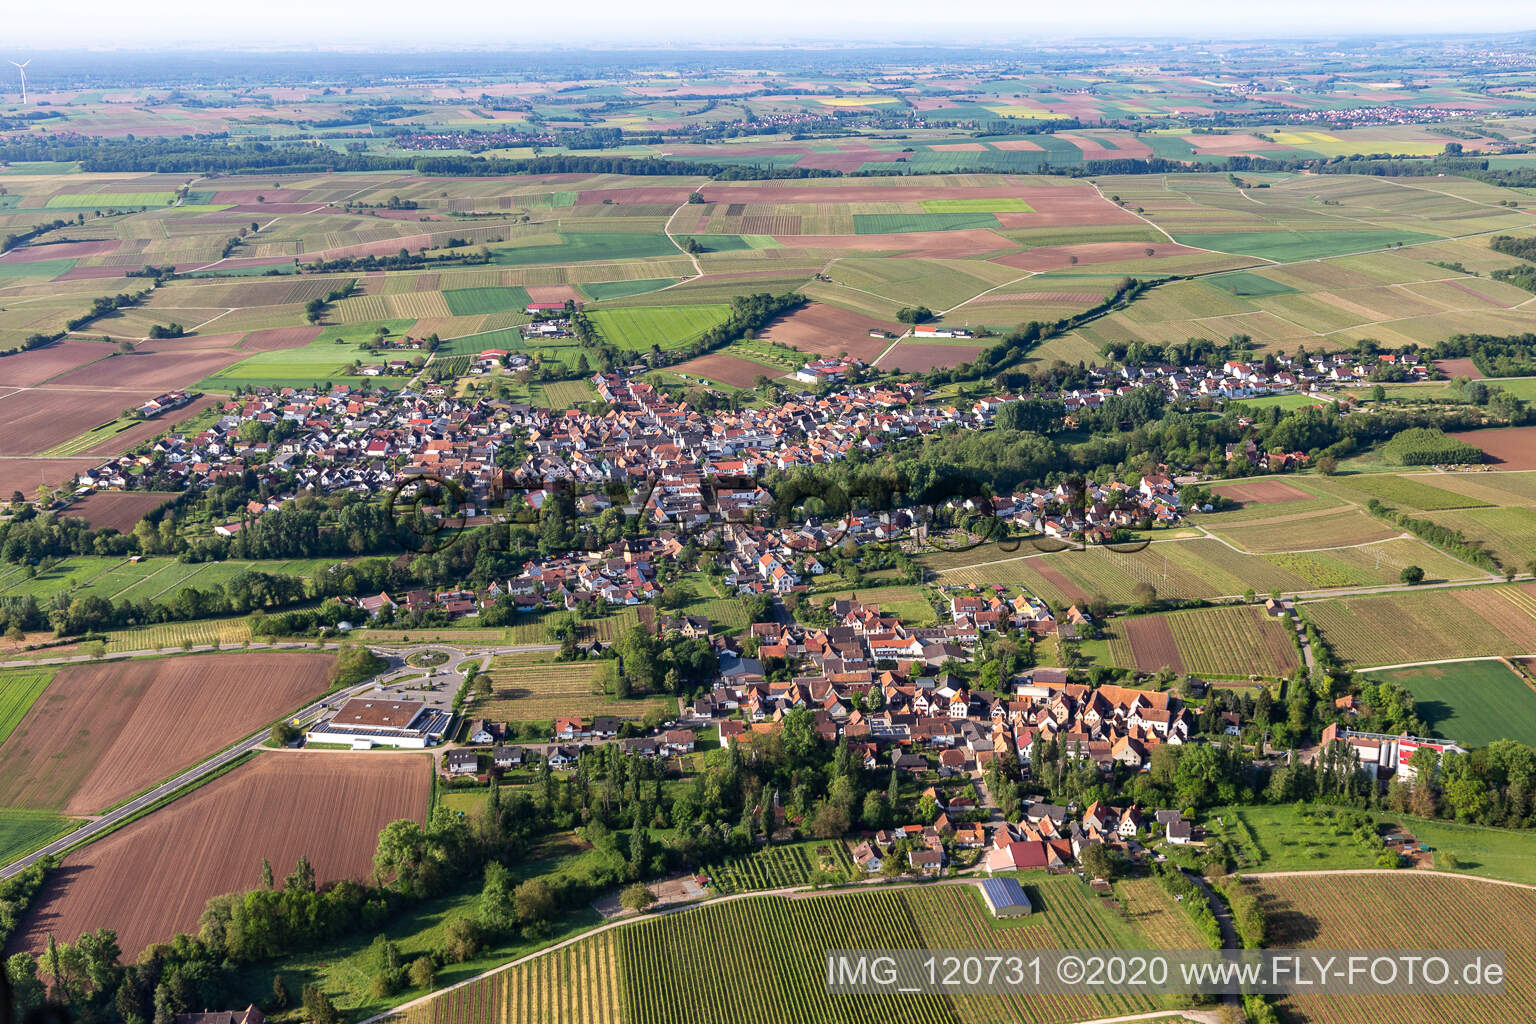 District Appenhofen in Billigheim-Ingenheim in the state Rhineland-Palatinate, Germany seen from a drone